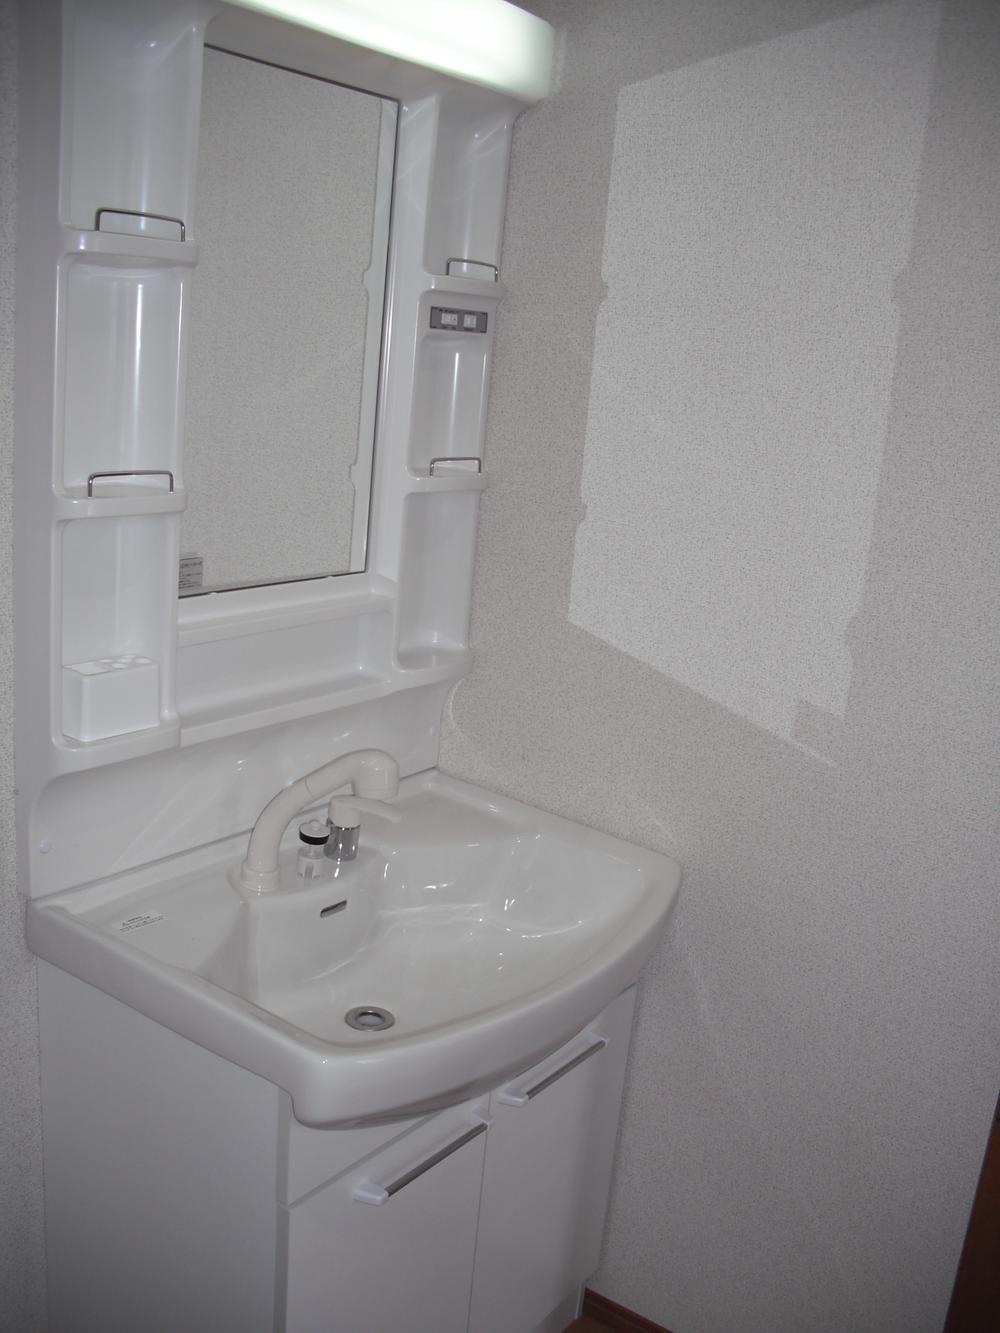 Wash basin, toilet. Newly built single-family Kakogawa Kakogawachoinaya